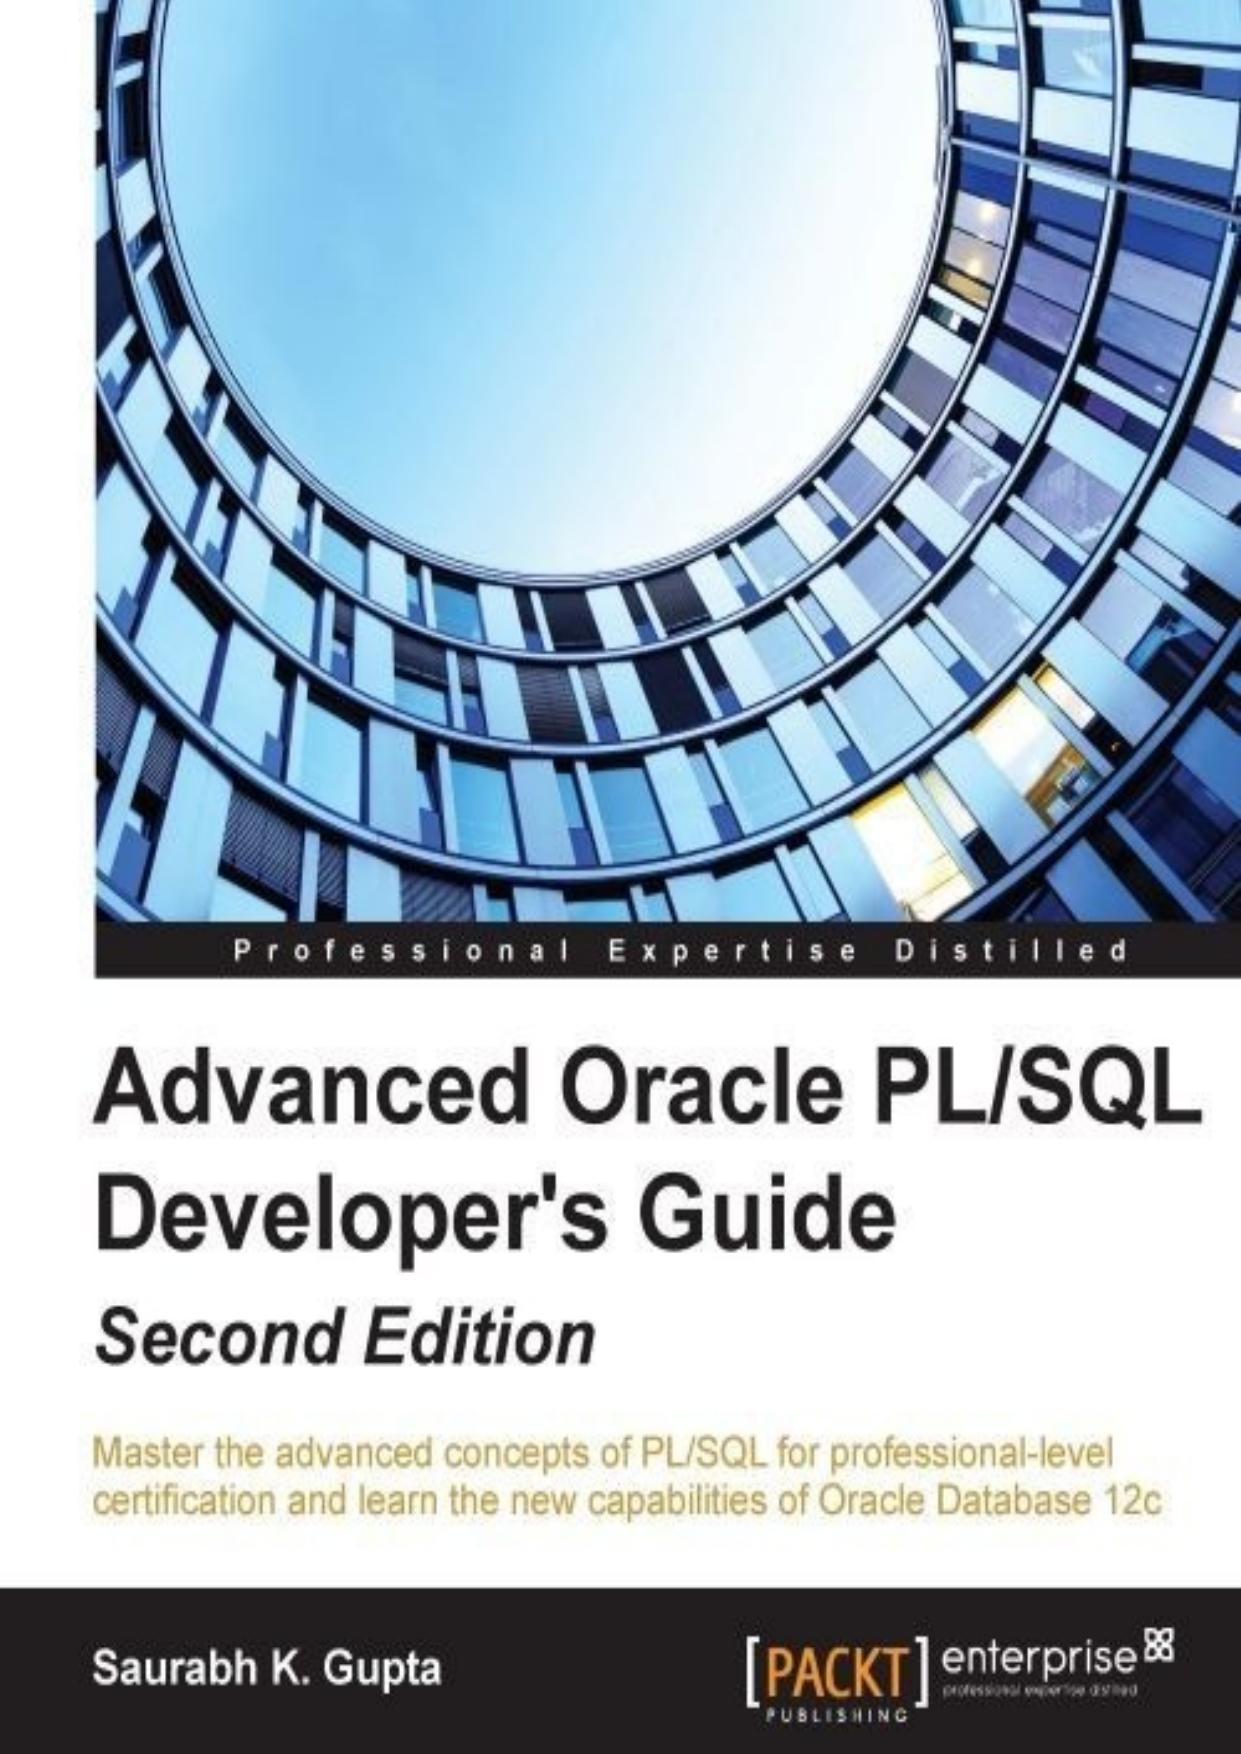 Advanced Oracle PLSQL Developer's Guide - Second Edition by Saurabh K. Gupta